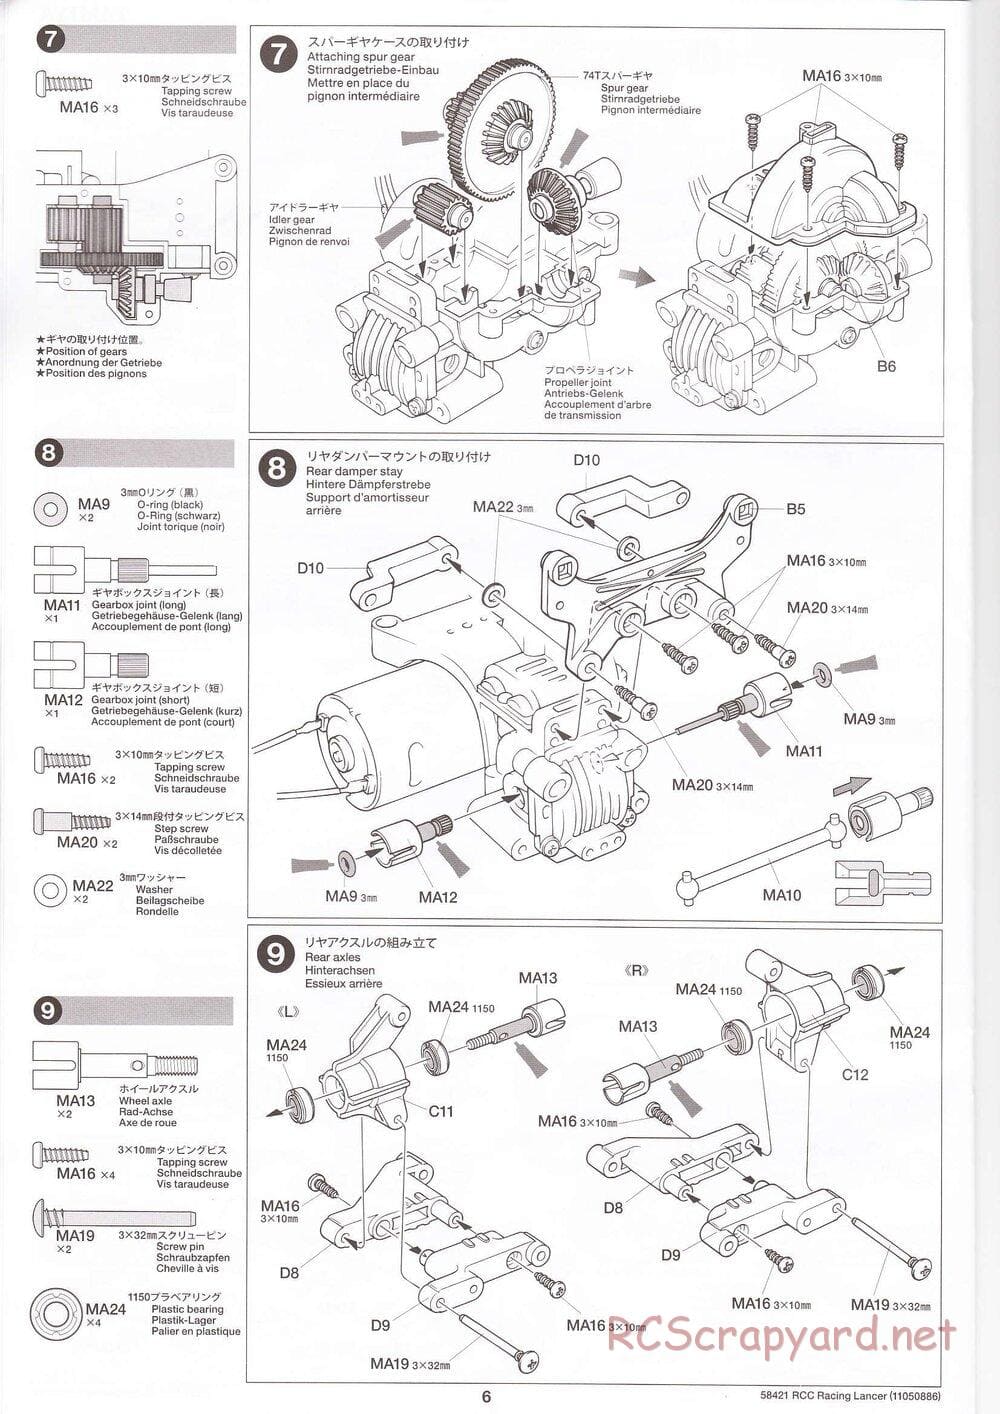 Tamiya - Mitsubishi Racing Lancer - DF-01 Chassis - Manual - Page 6